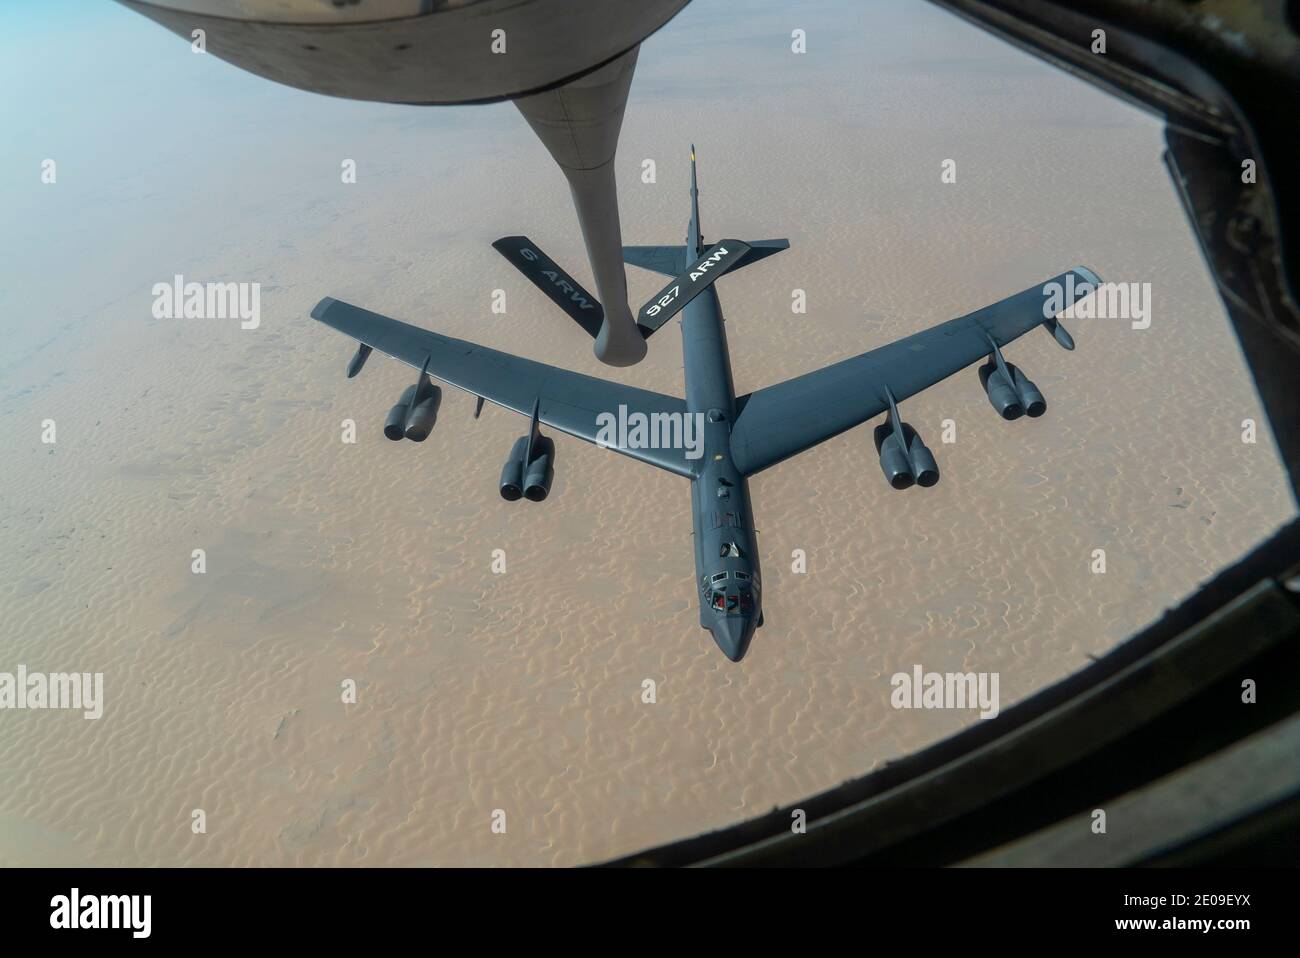 Golfo Pérsico, Estados Unidos. 30 de diciembre de 2020. Un avión de bombardero estratégico B-52 Stratofortress de la Fuerza Aérea de EE.UU. Del ala 5 Bomb, se acerca a un KC-135 Stratotanker para repostar el 30 de diciembre de 2020 sobre el Golfo Pérsico. El bombardero es la tercera muestra de misión de la fuerza como un mensaje a Irán. Crédito: Planetpix/Alamy Live News Foto de stock